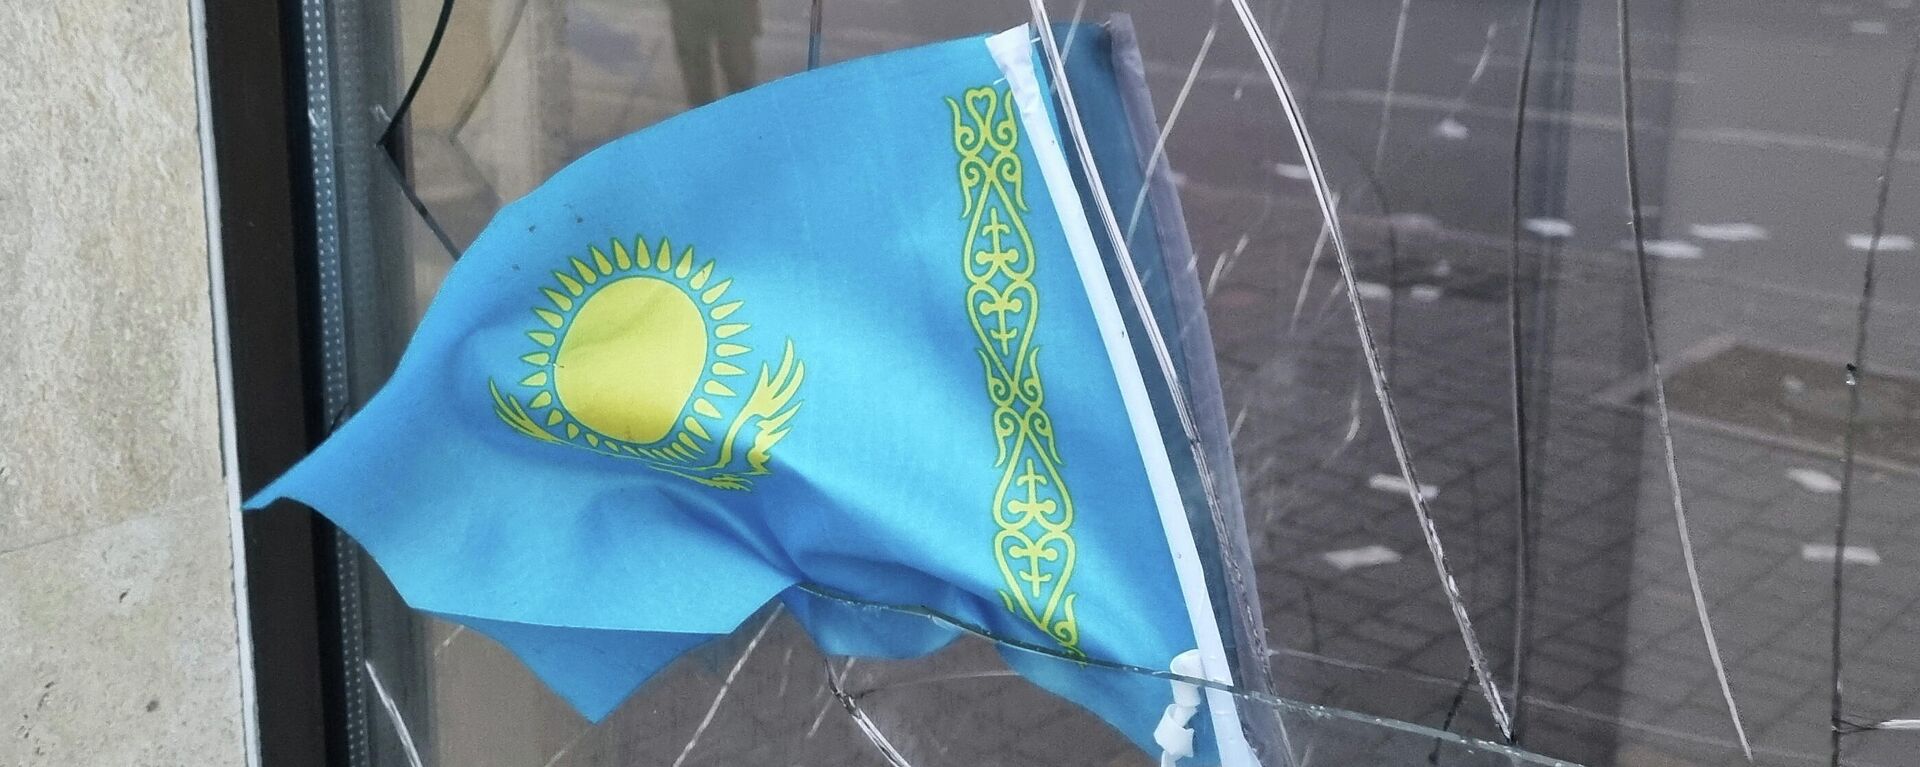 Государственный флаг Казахстана на разбитом окне банка, фото из архива - Sputnik Азербайджан, 1920, 10.01.2022